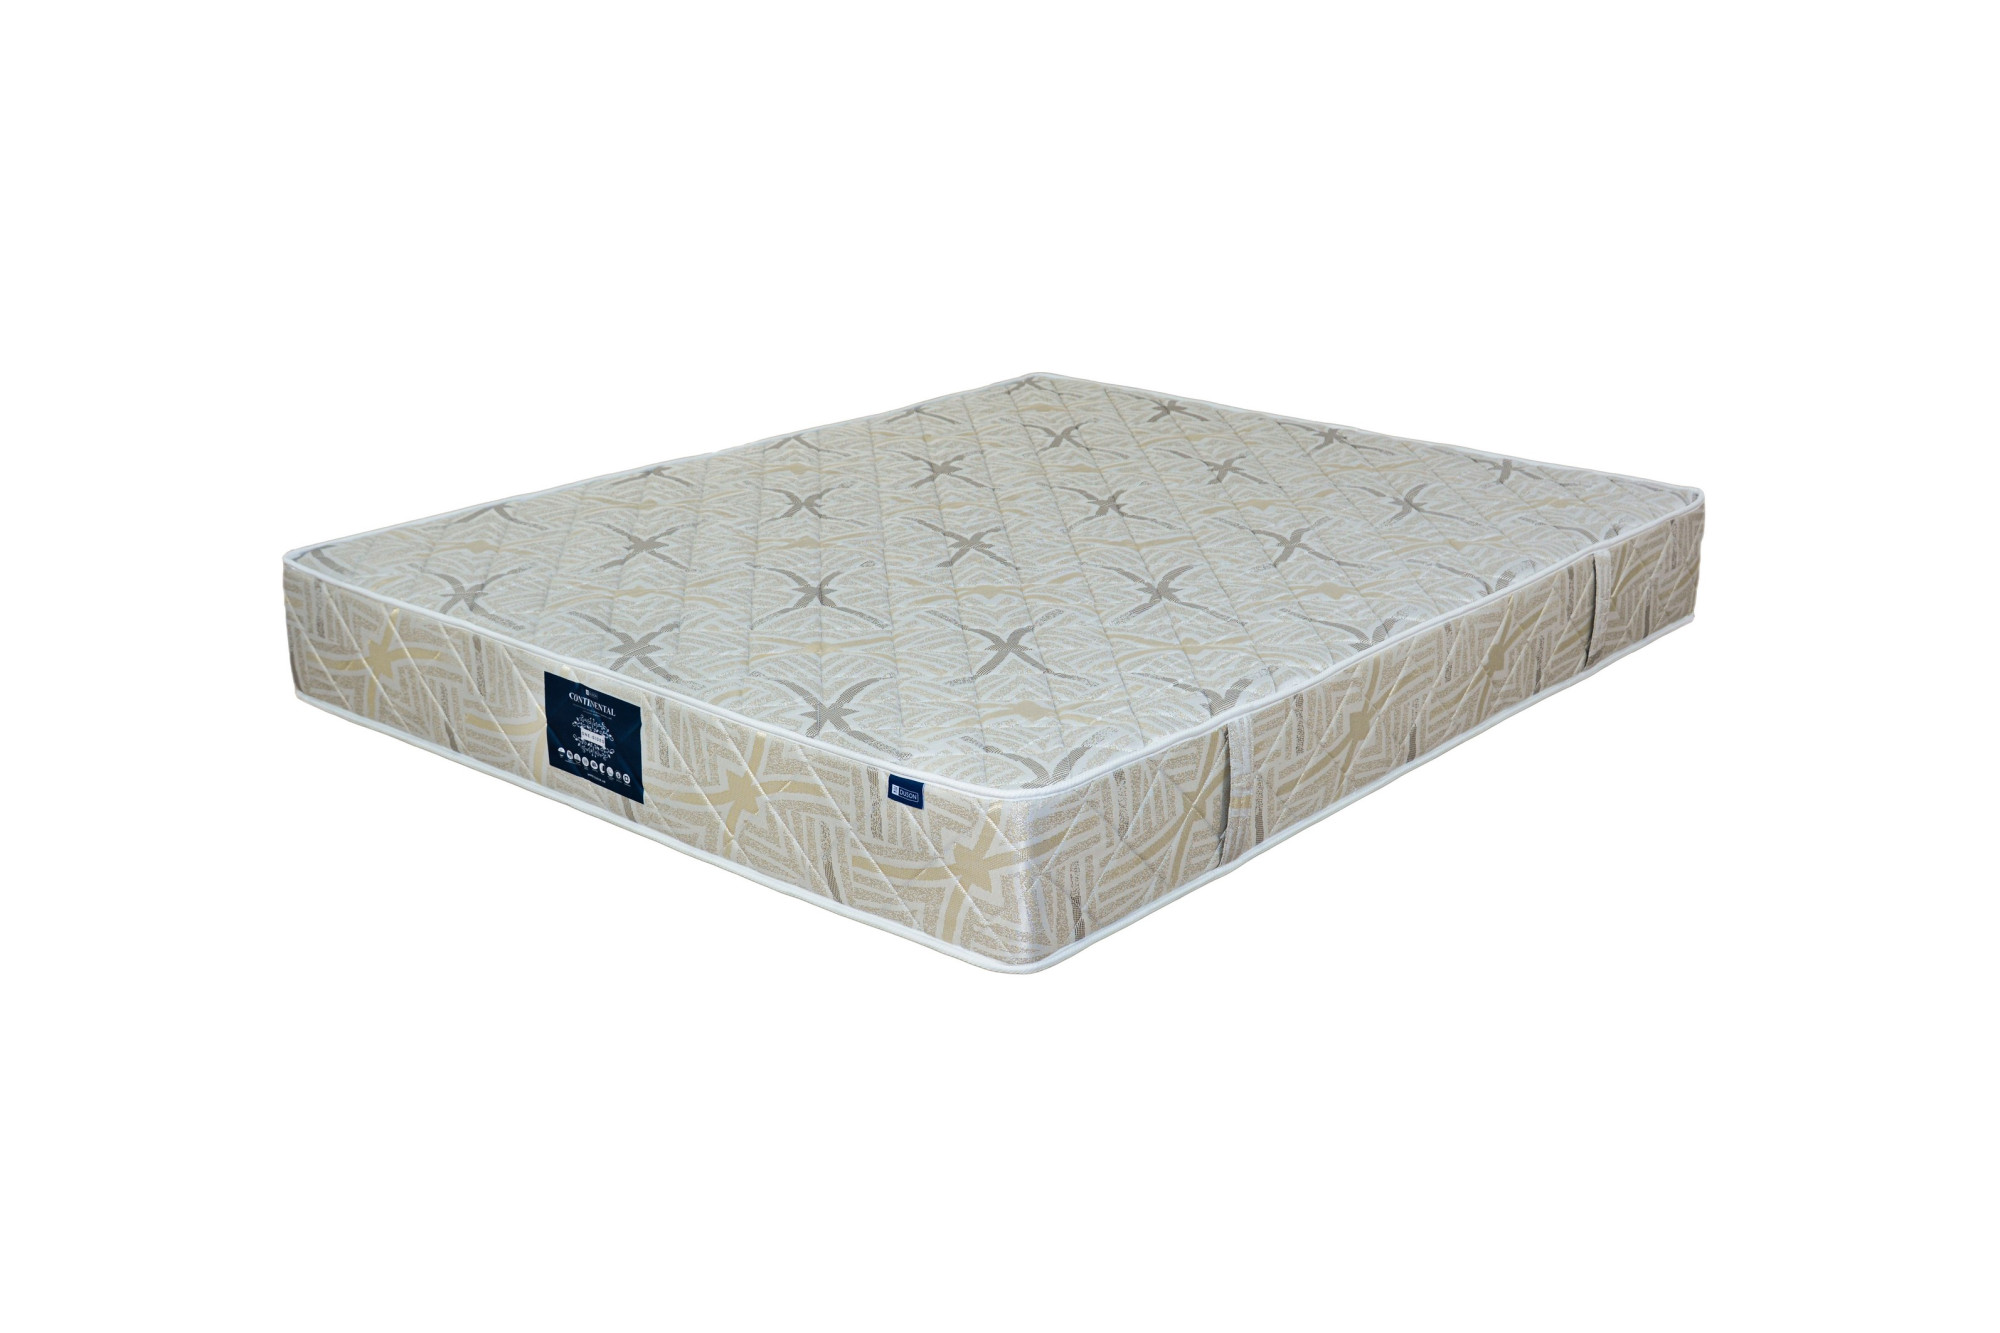 Orthopedic mattress Continental One-sided 120x200 soft, 25cm